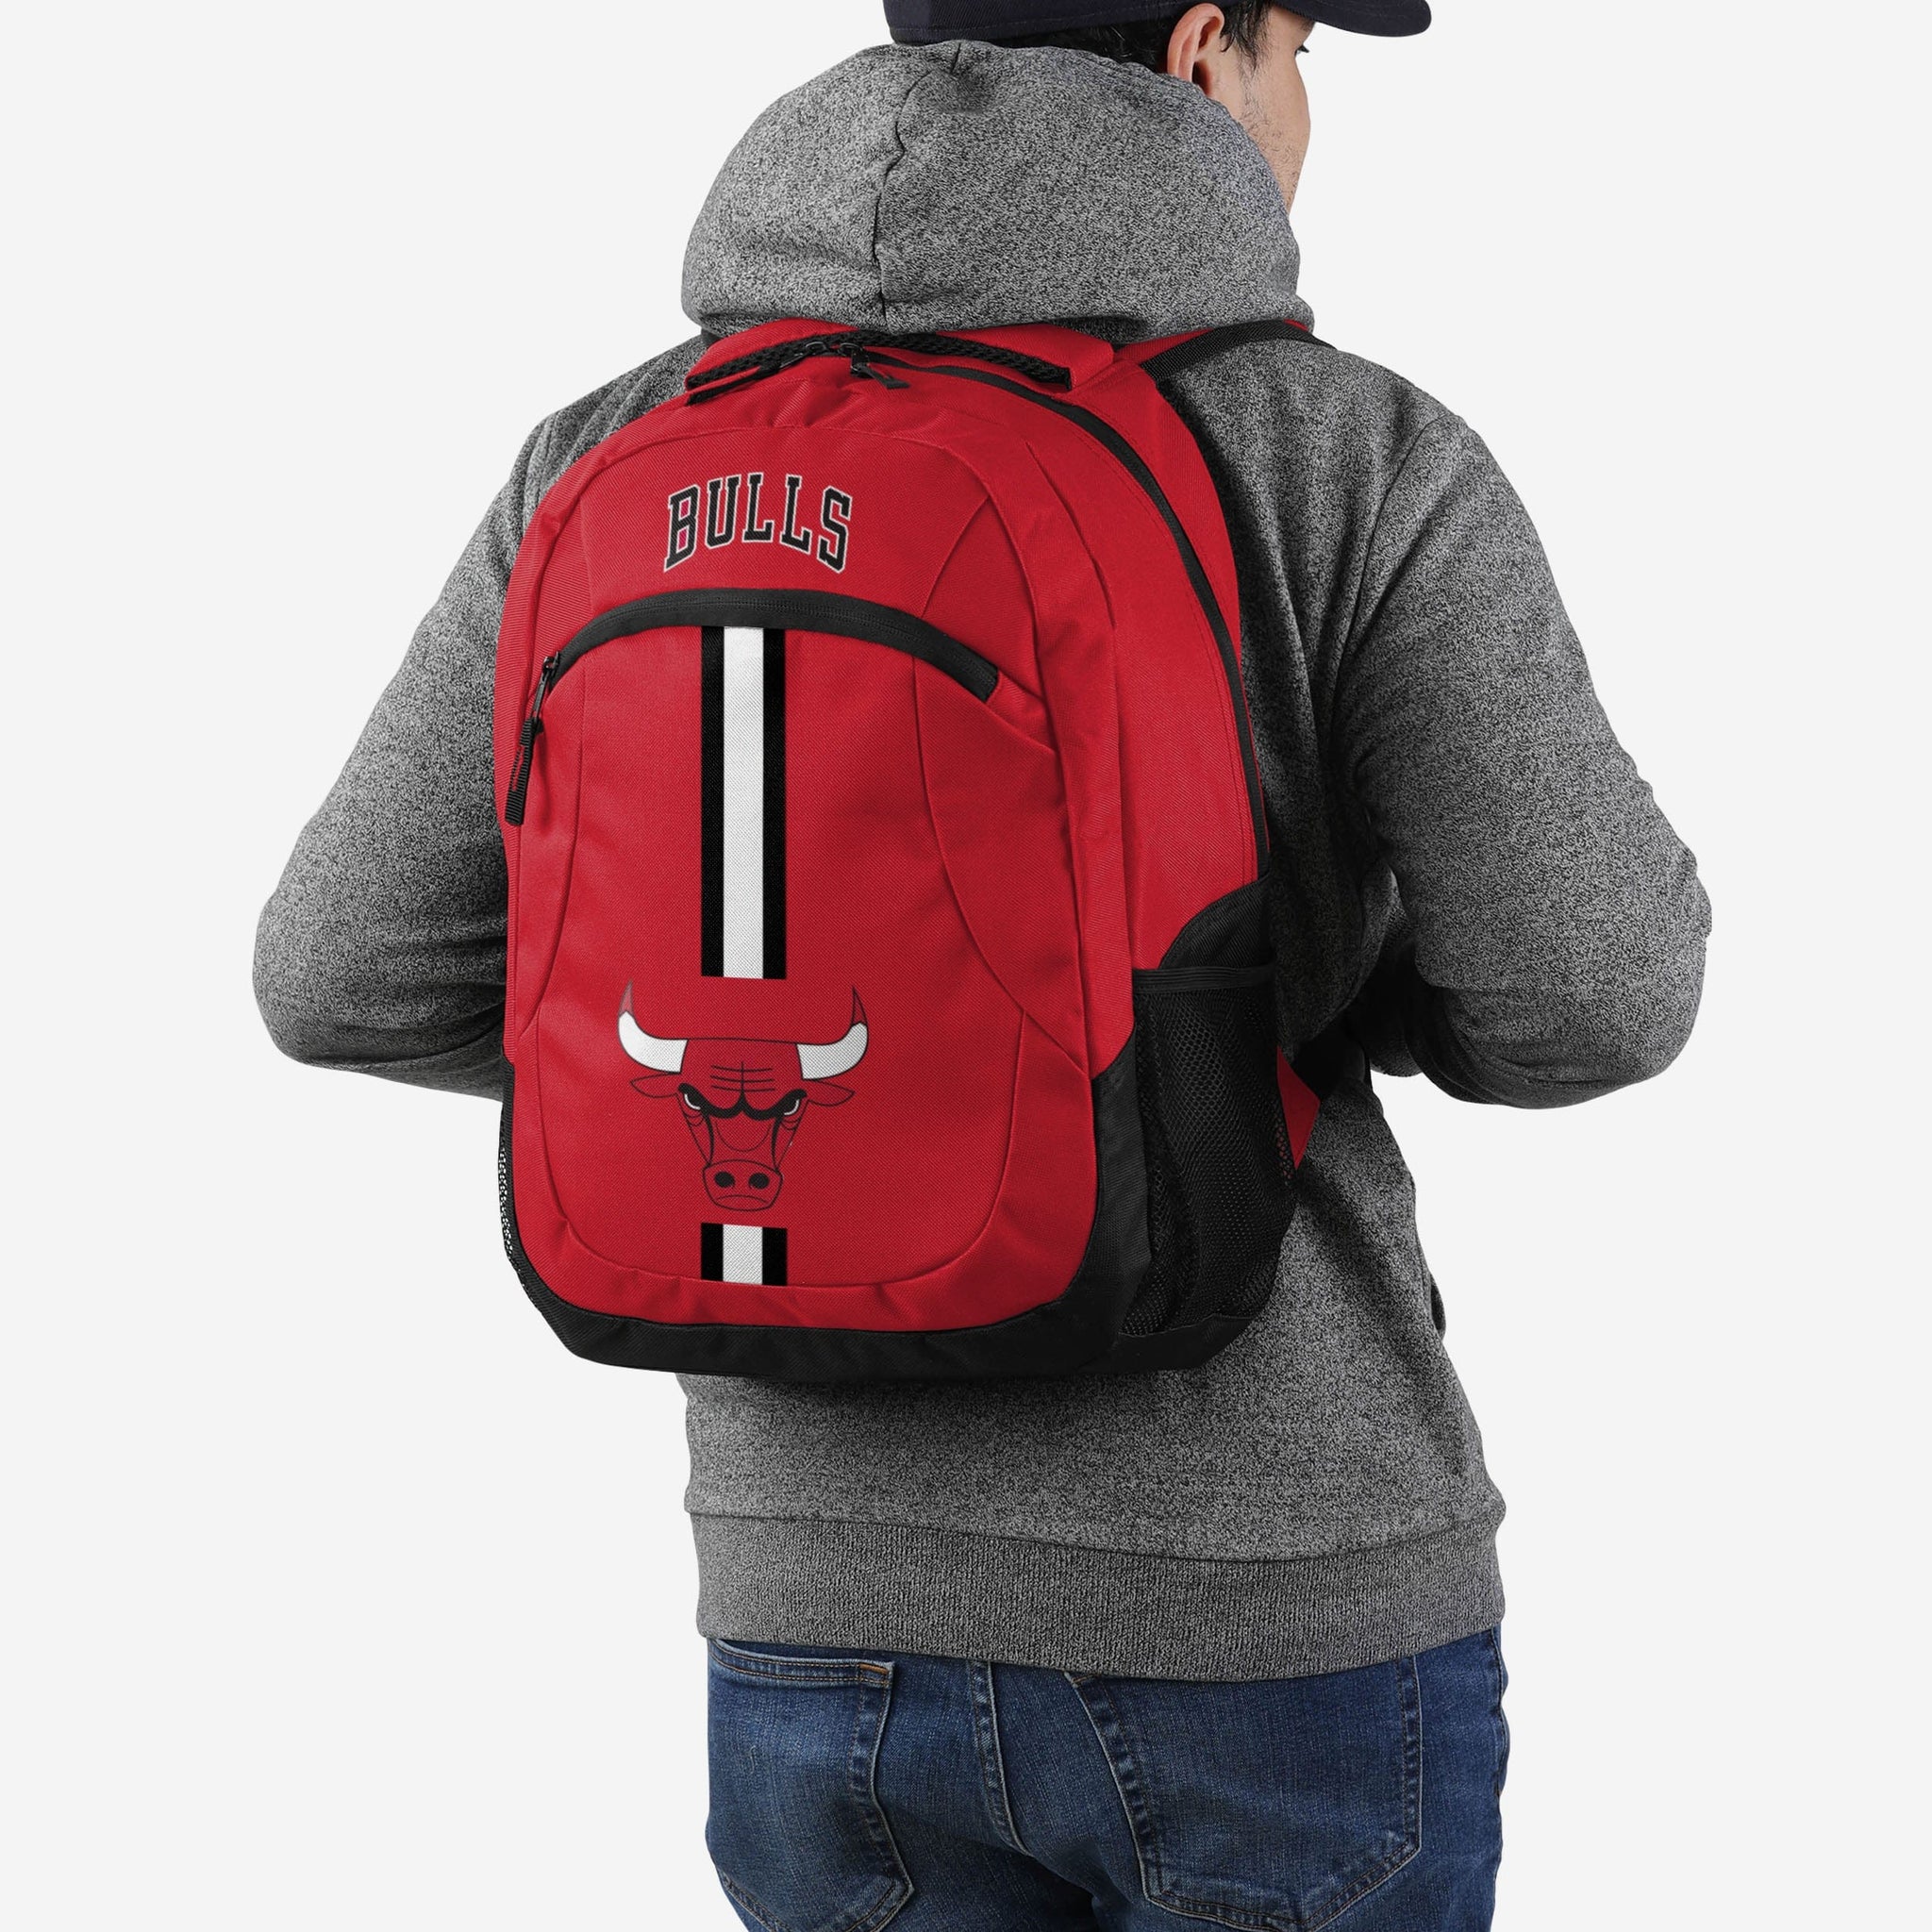 NBA Chicago Bulls Logo Mini Backpack Black/red